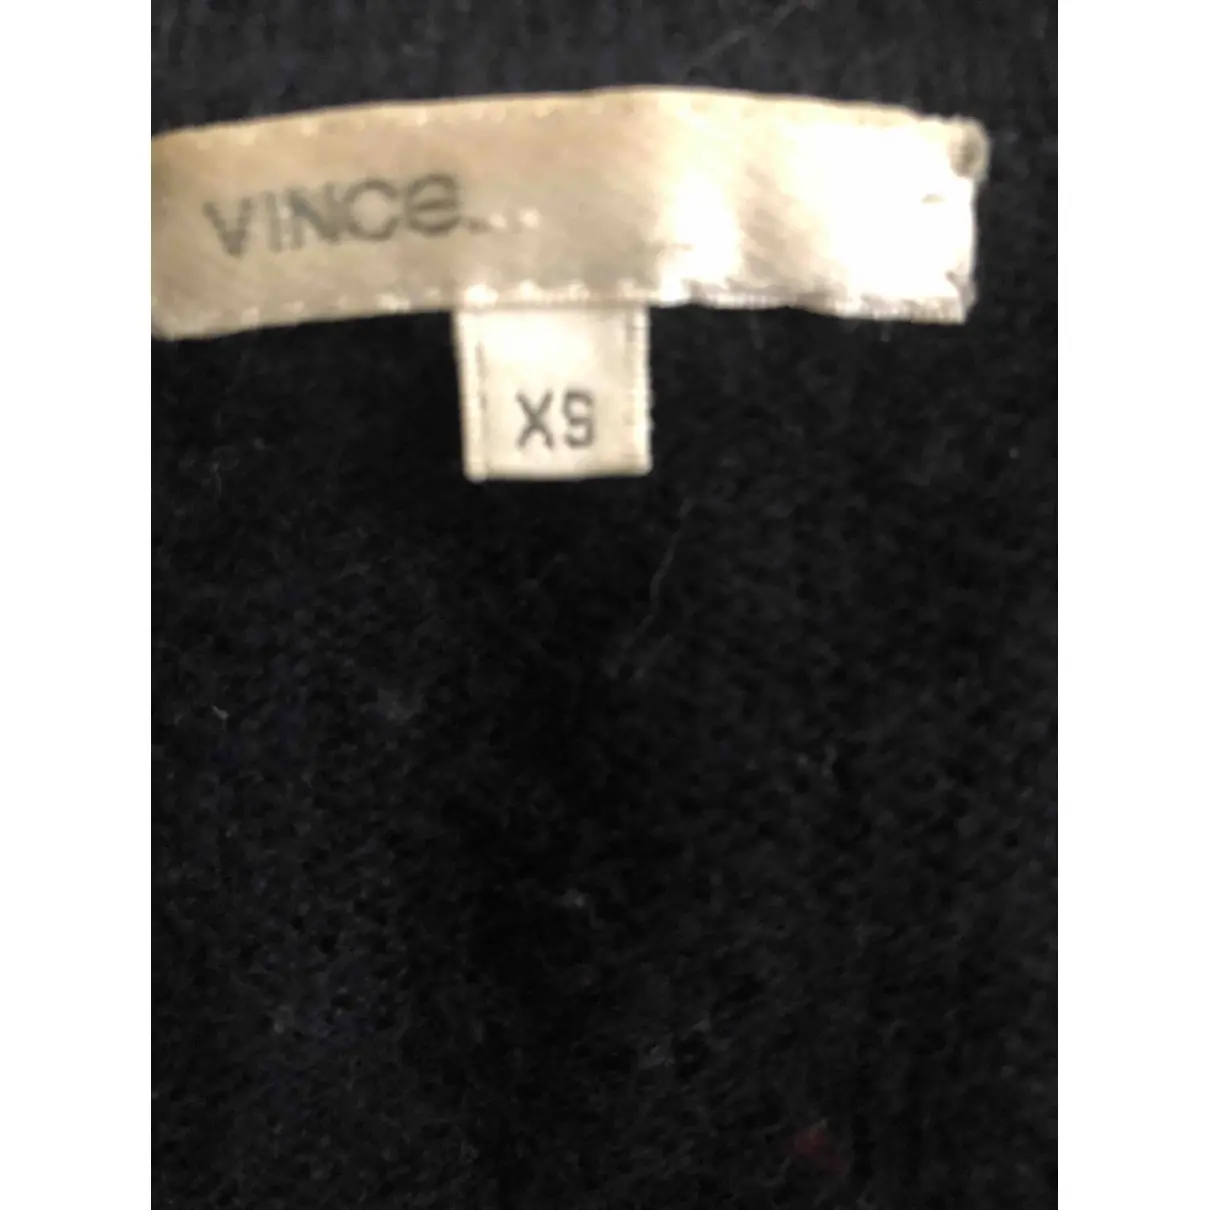 Vince Cashmere cardigan for sale